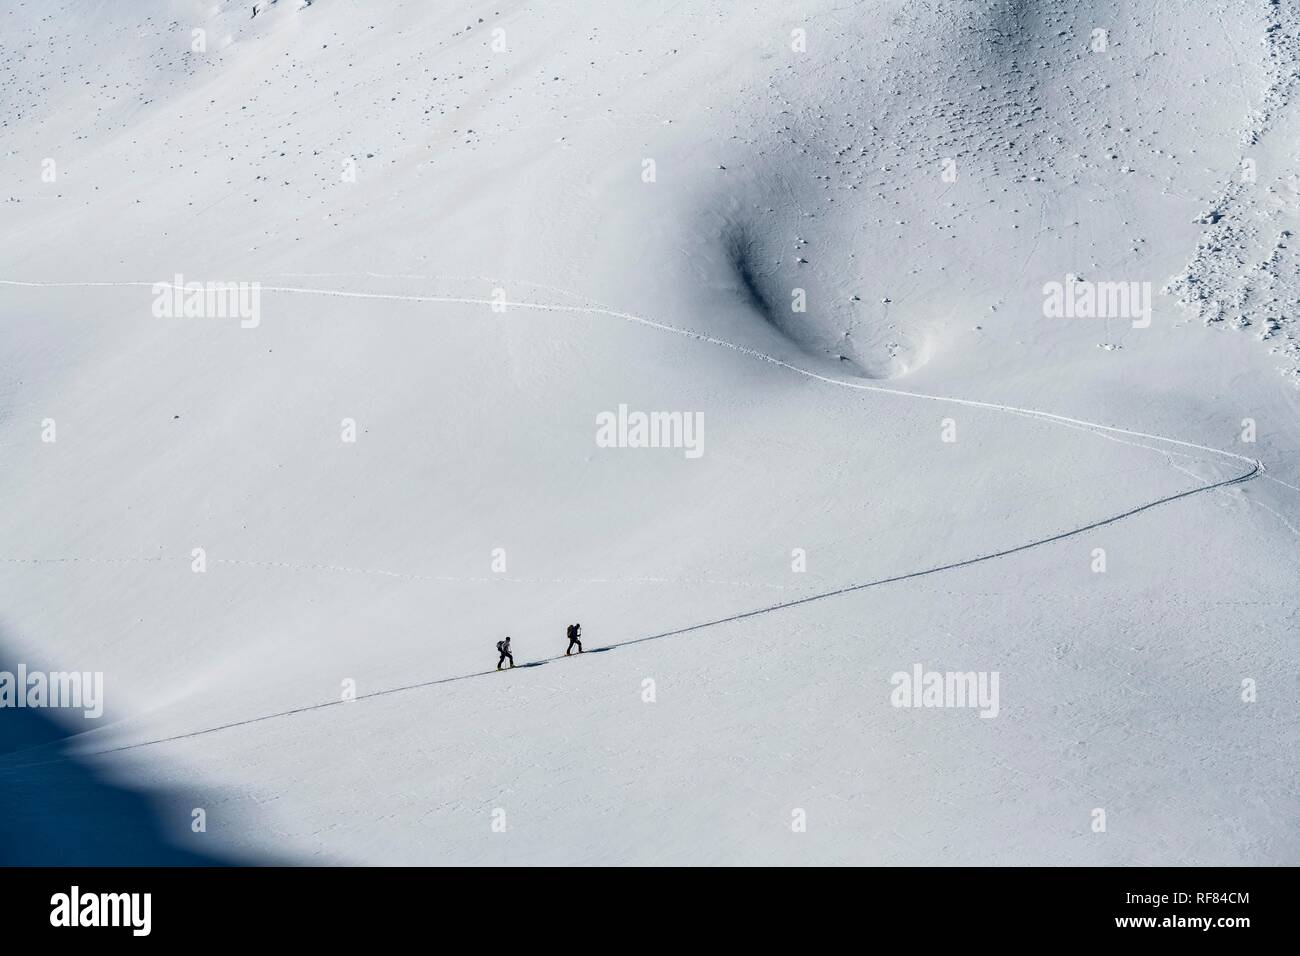 Ski tourers on the ascent, Reutte, Außerfern, Tyrol, Austria Stock Photo